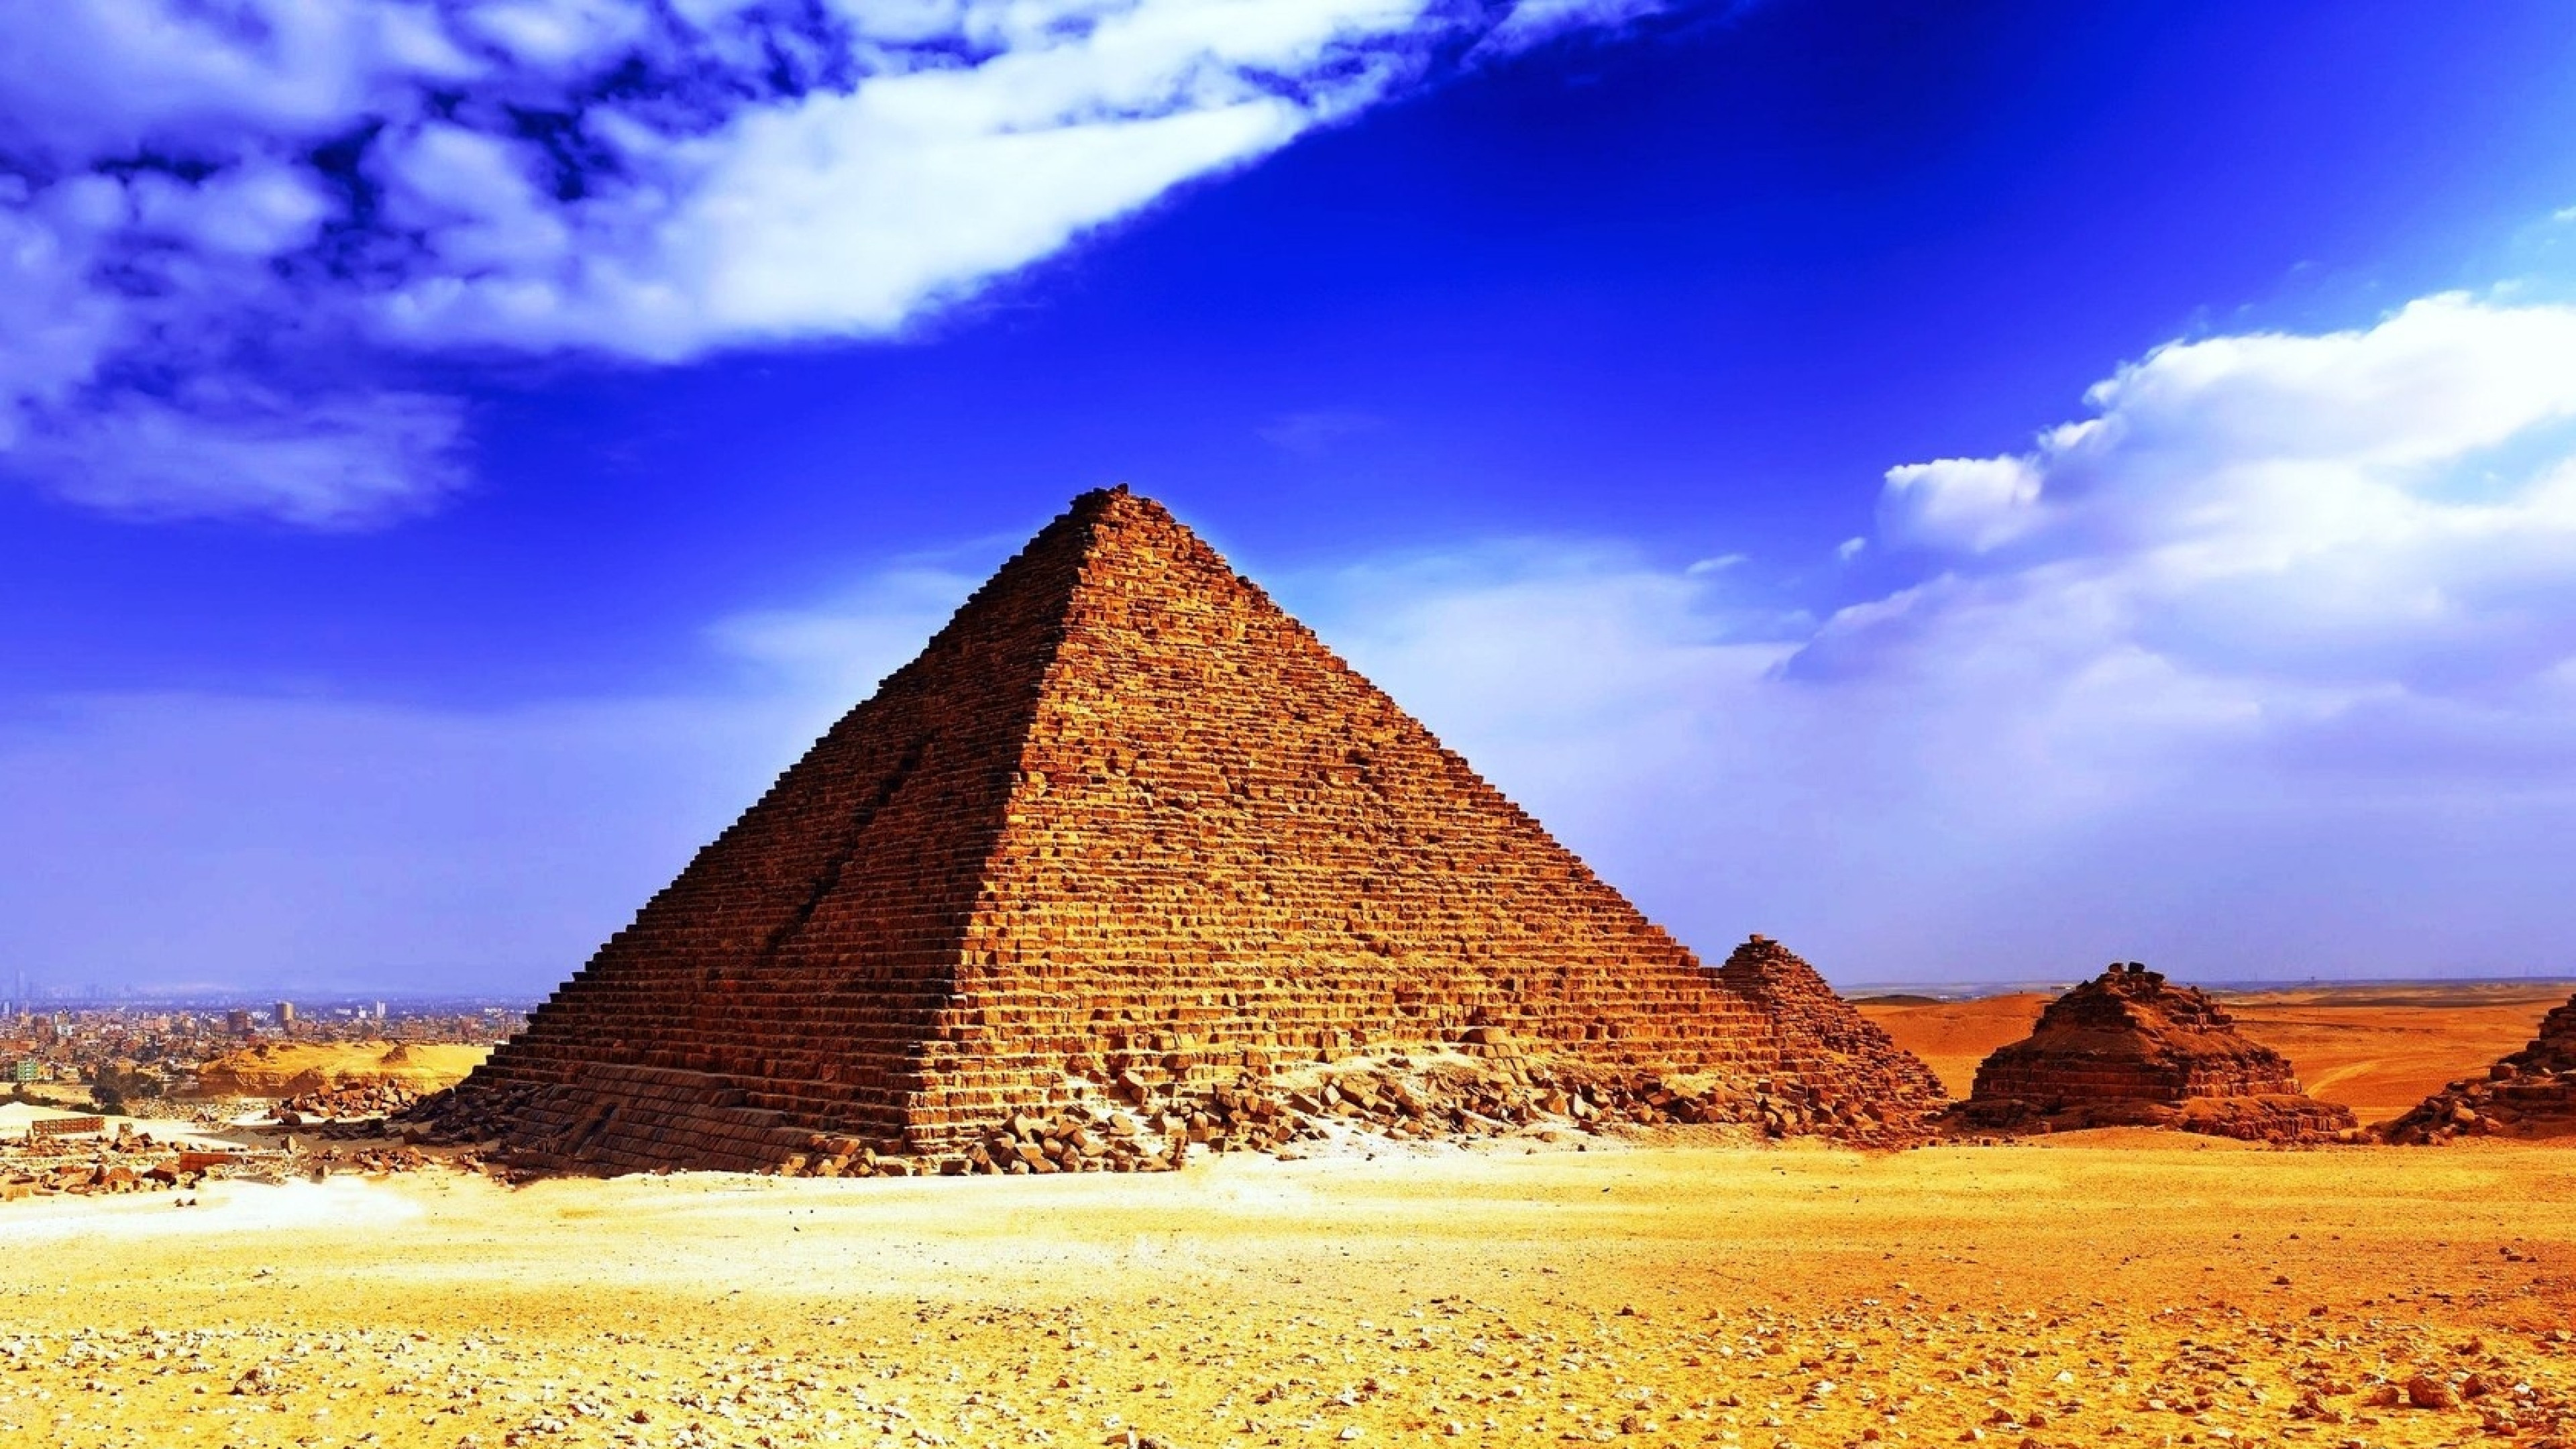 Preview Wallpaper Egypt, Pyramids, Desert, Sand, Heat, - Egypt Pyramid - HD Wallpaper 